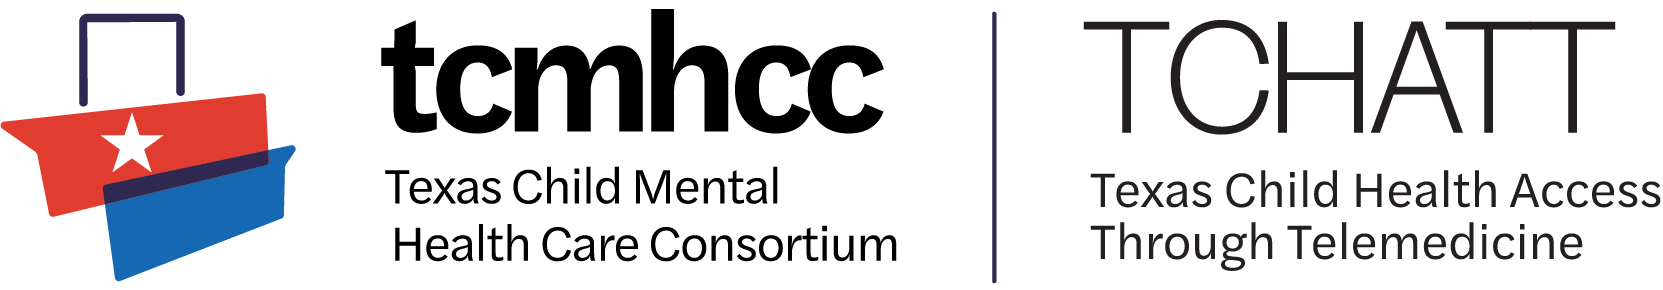 TCHATT-consortium logo